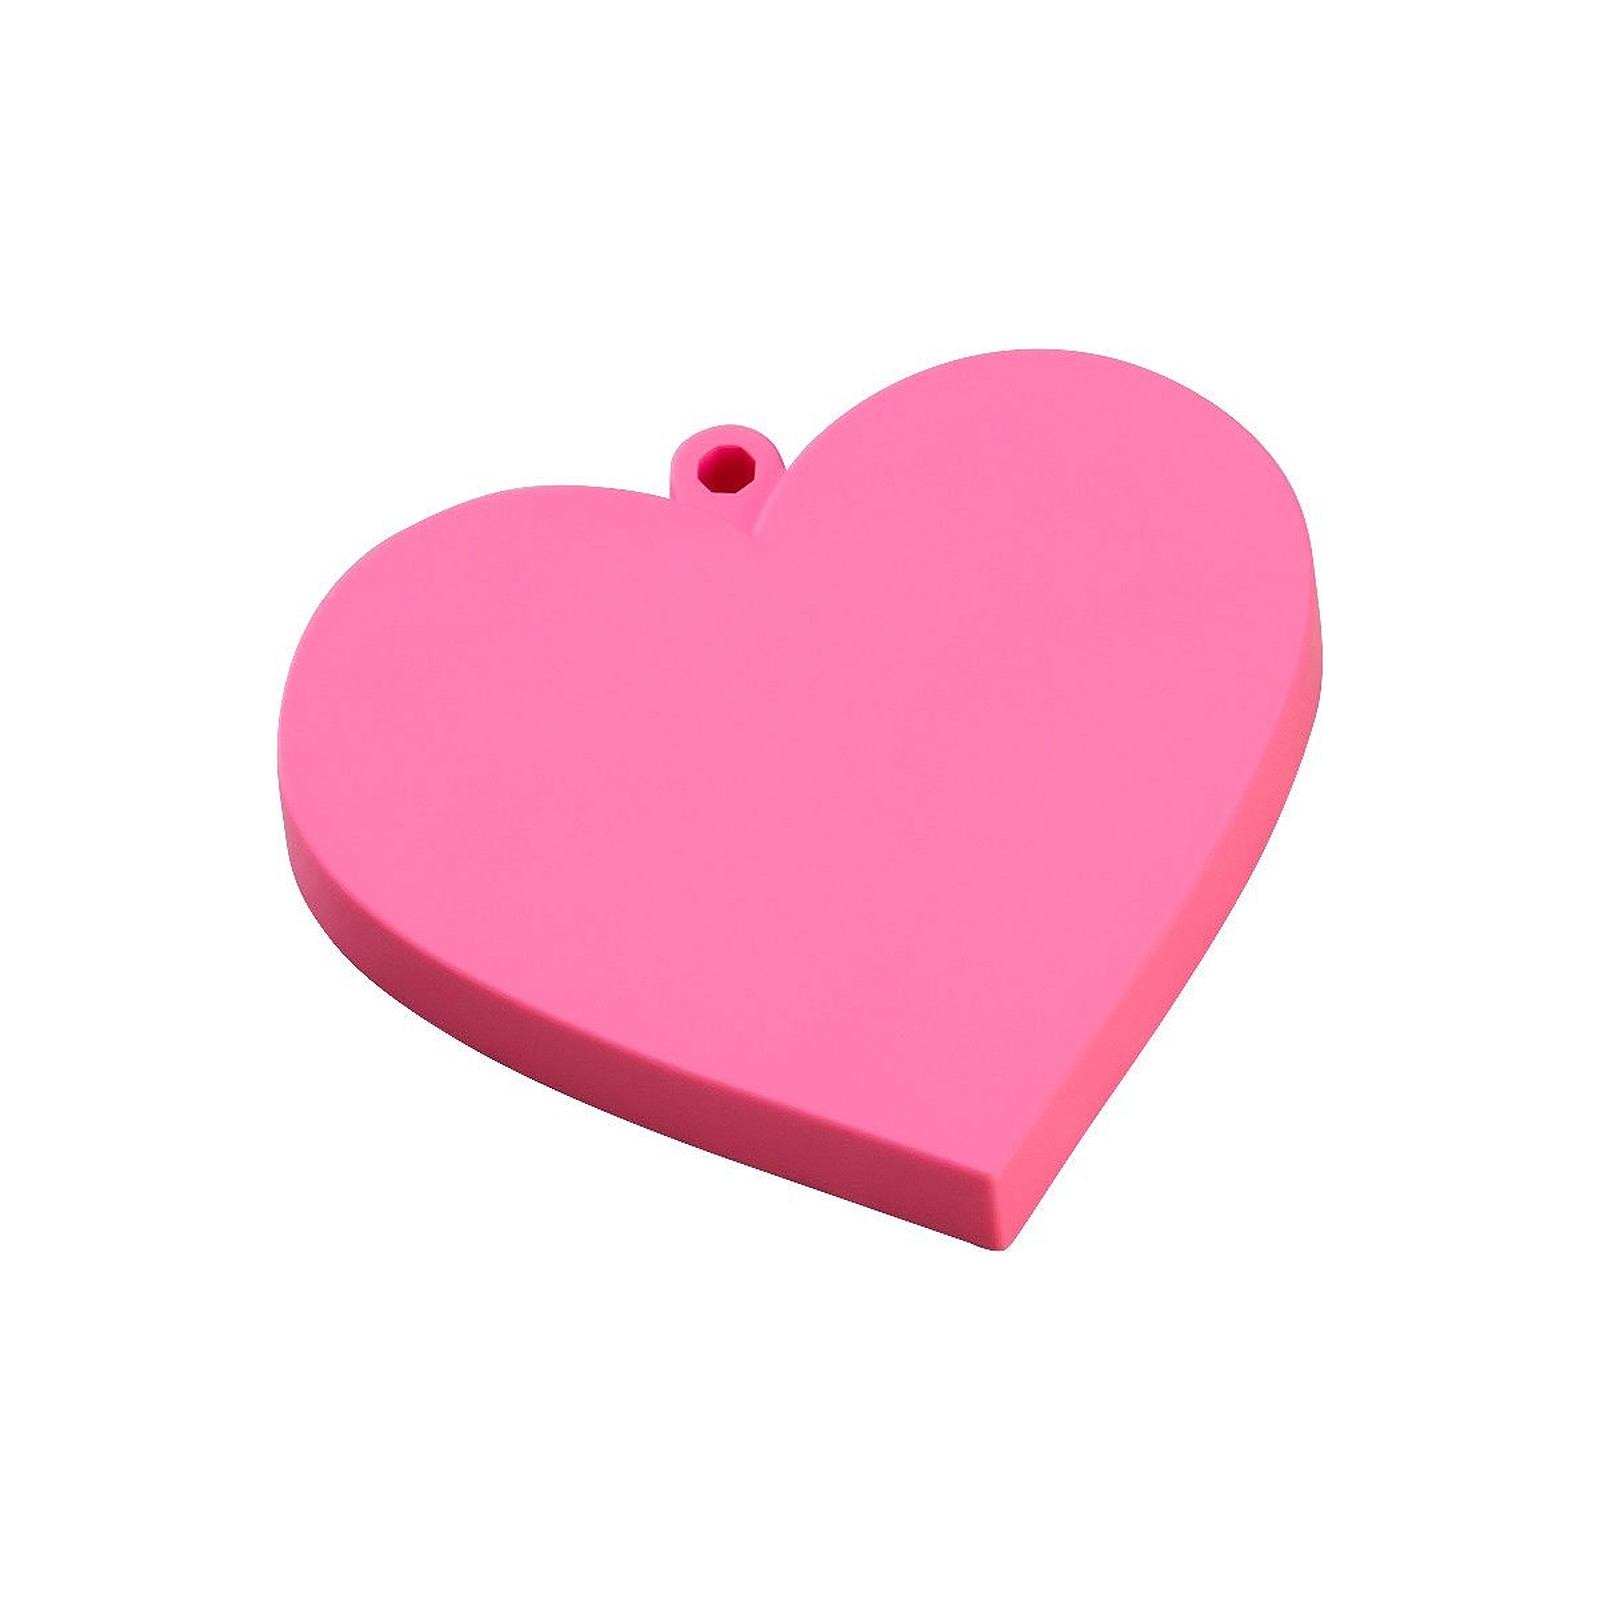 Nendoroid More - Socle pour figurines Nendoroid Heart Pink Version - Figurines Good Smile Company